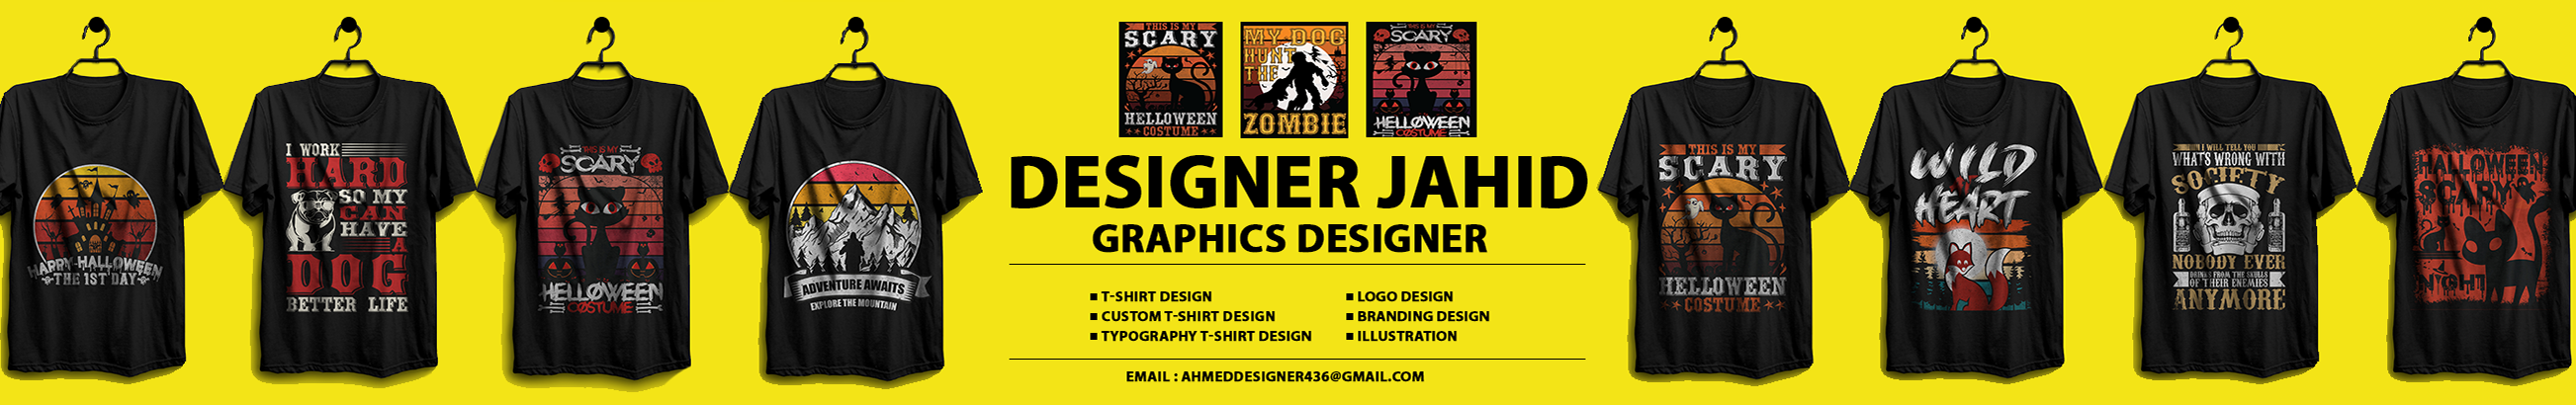 Designer Jahid's profile banner